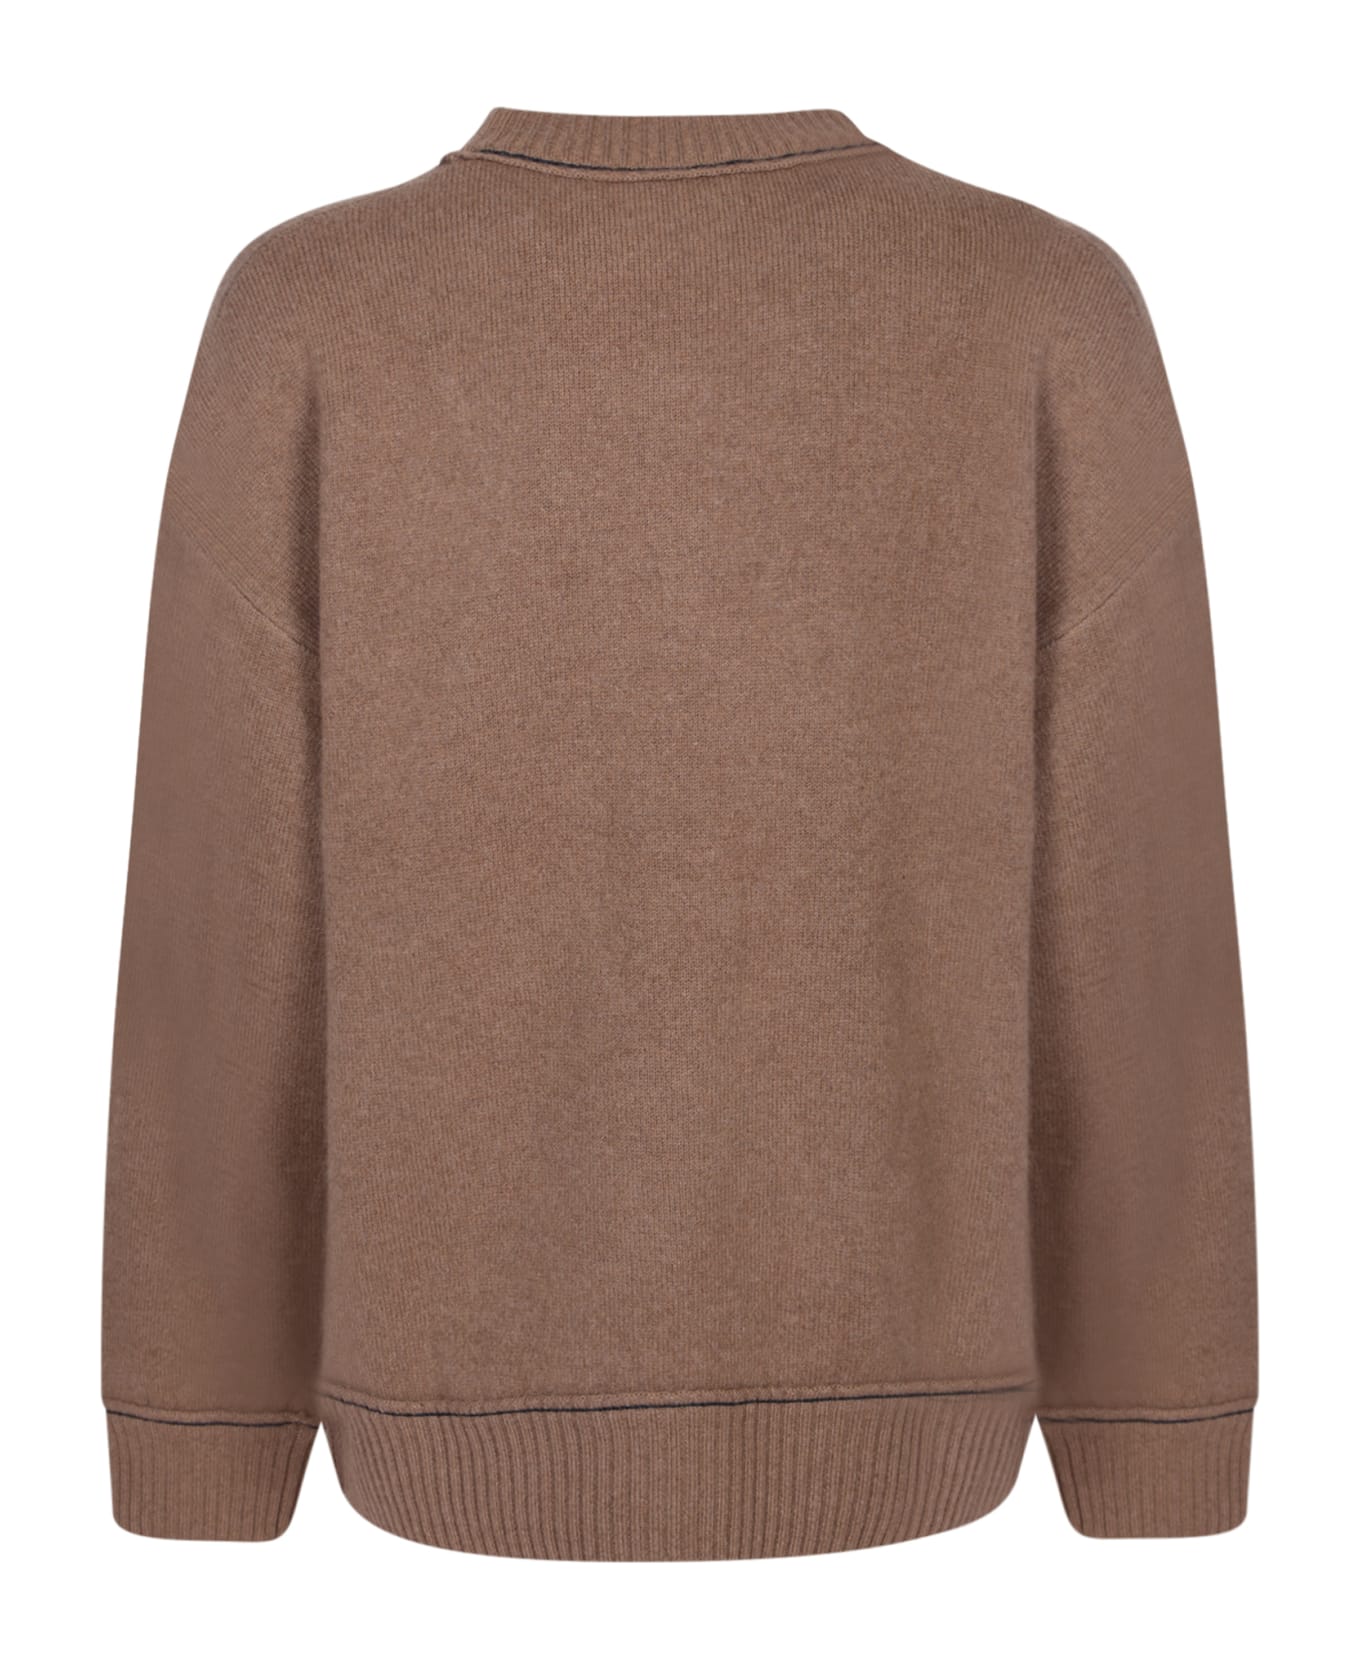 Sacai Cashmere And Cotton Beige Sweater - Beige